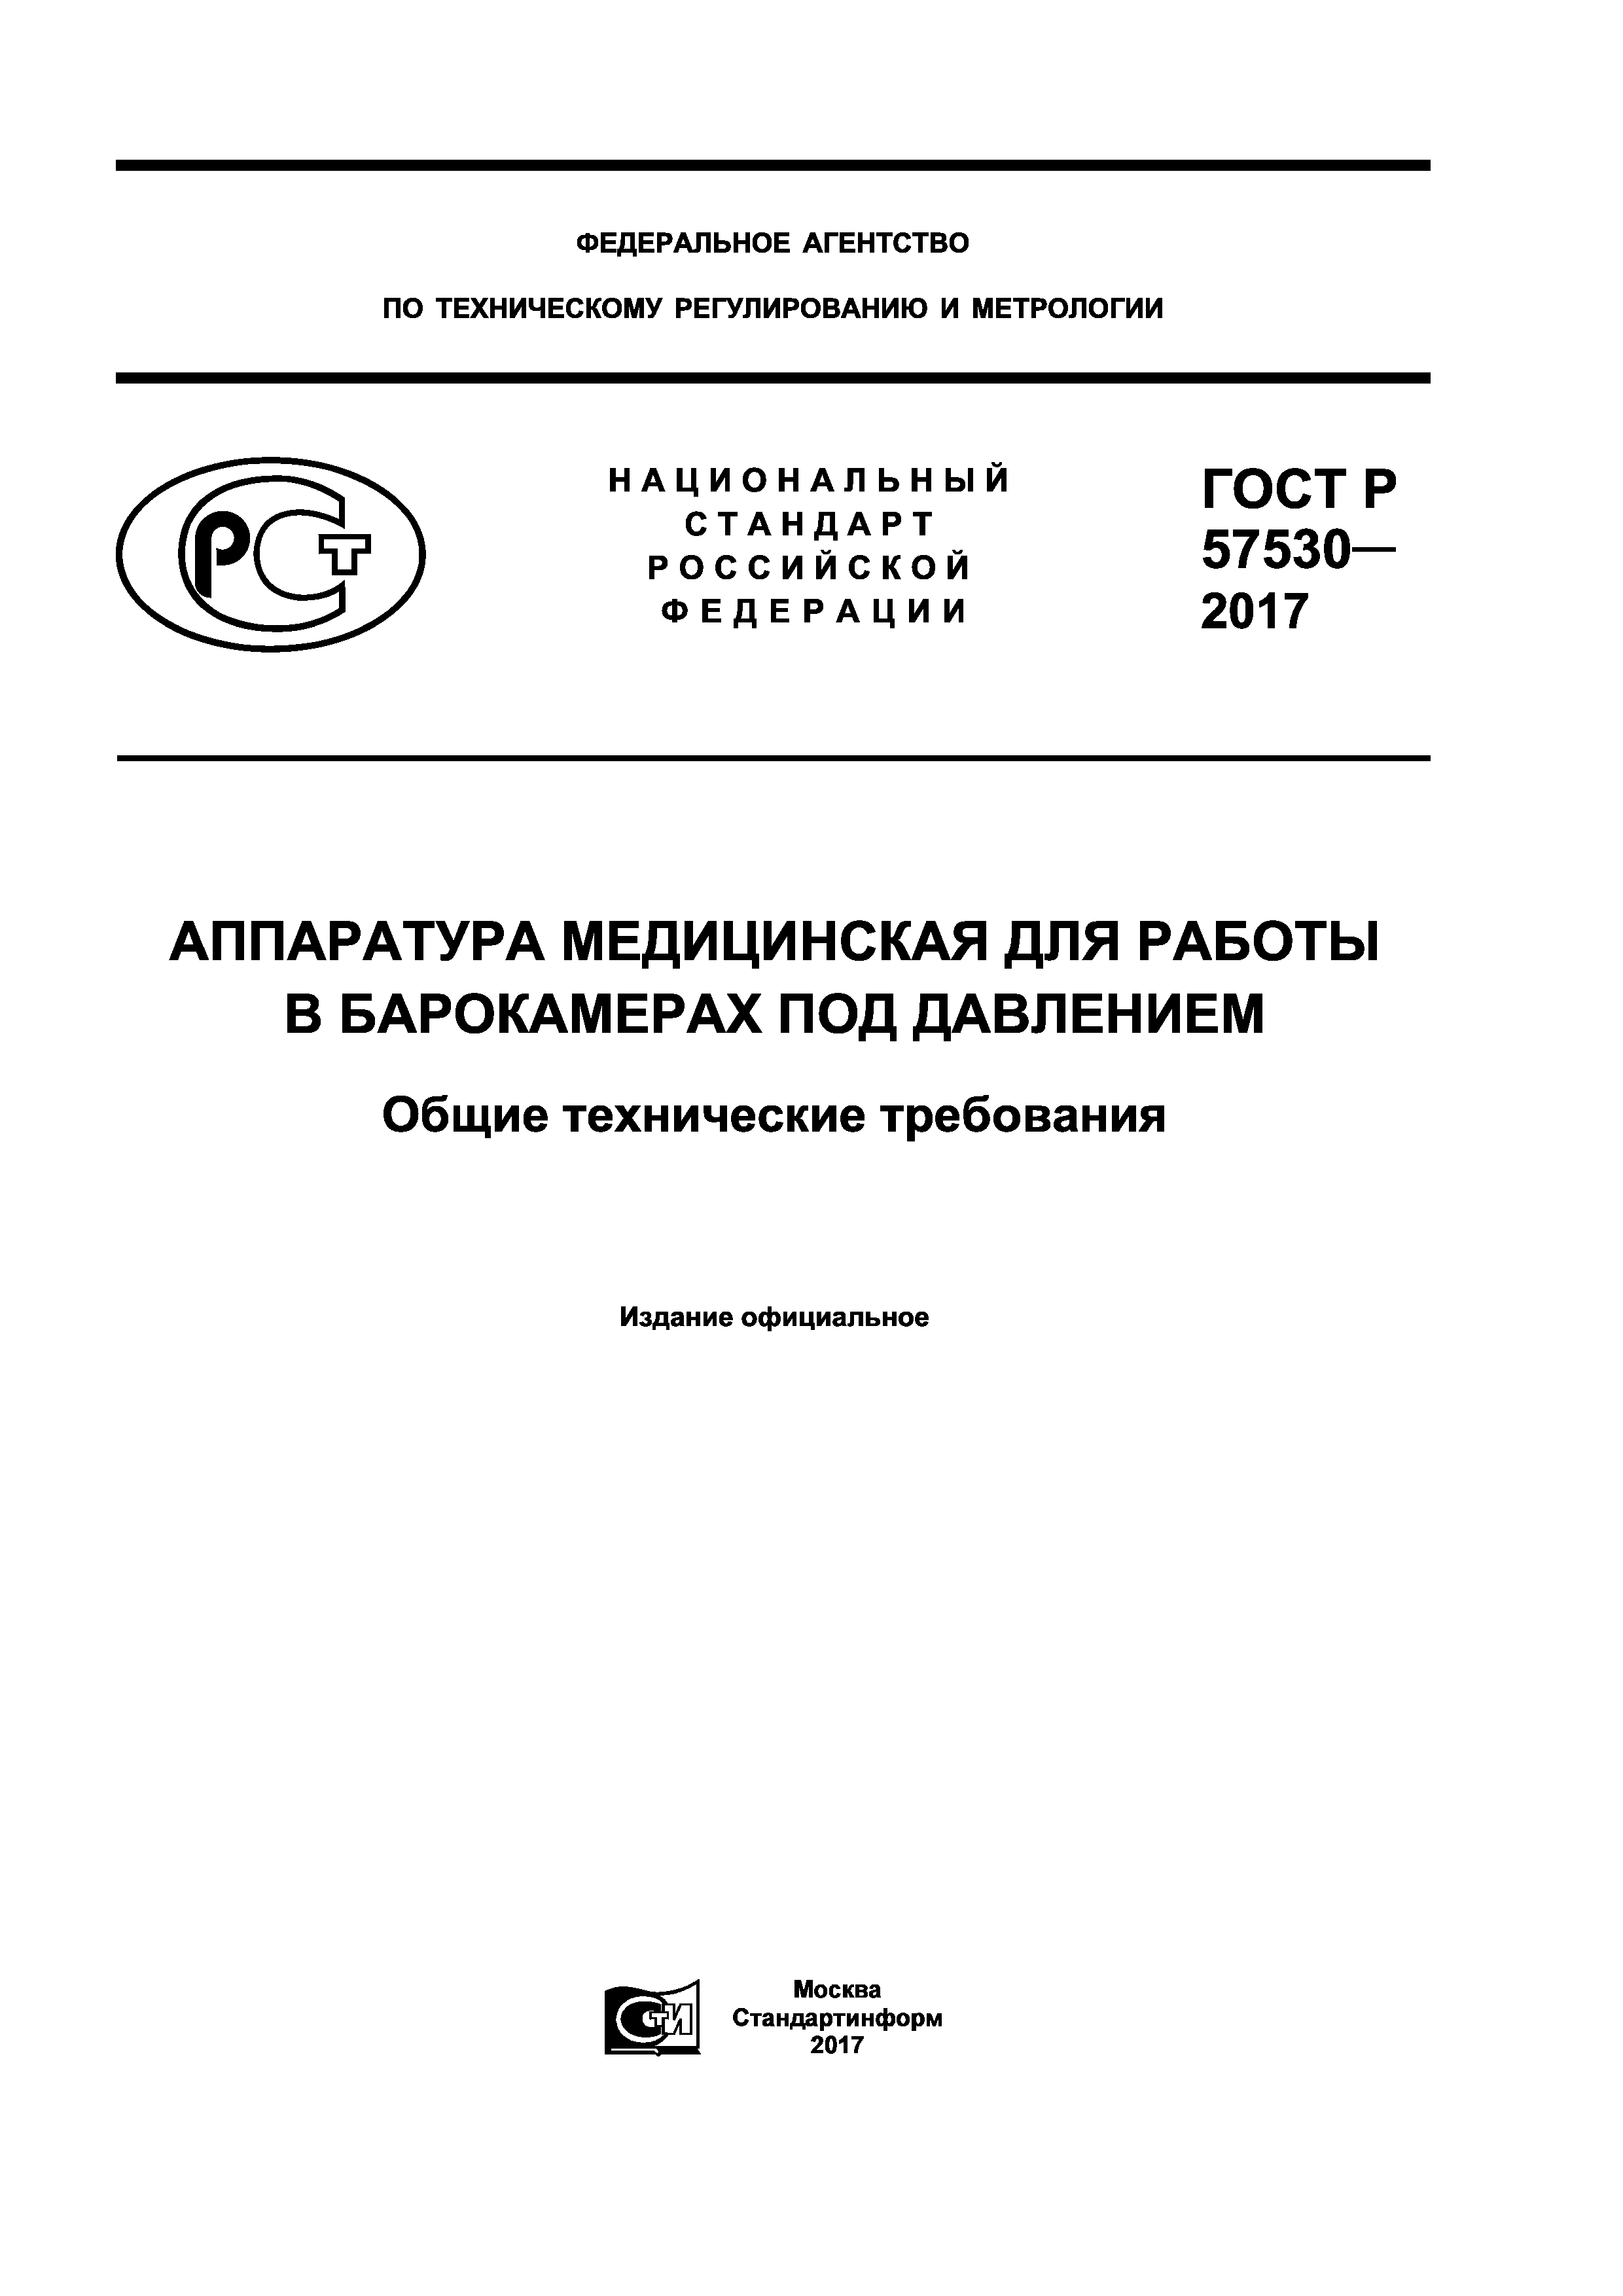 ГОСТ Р 57530-2017